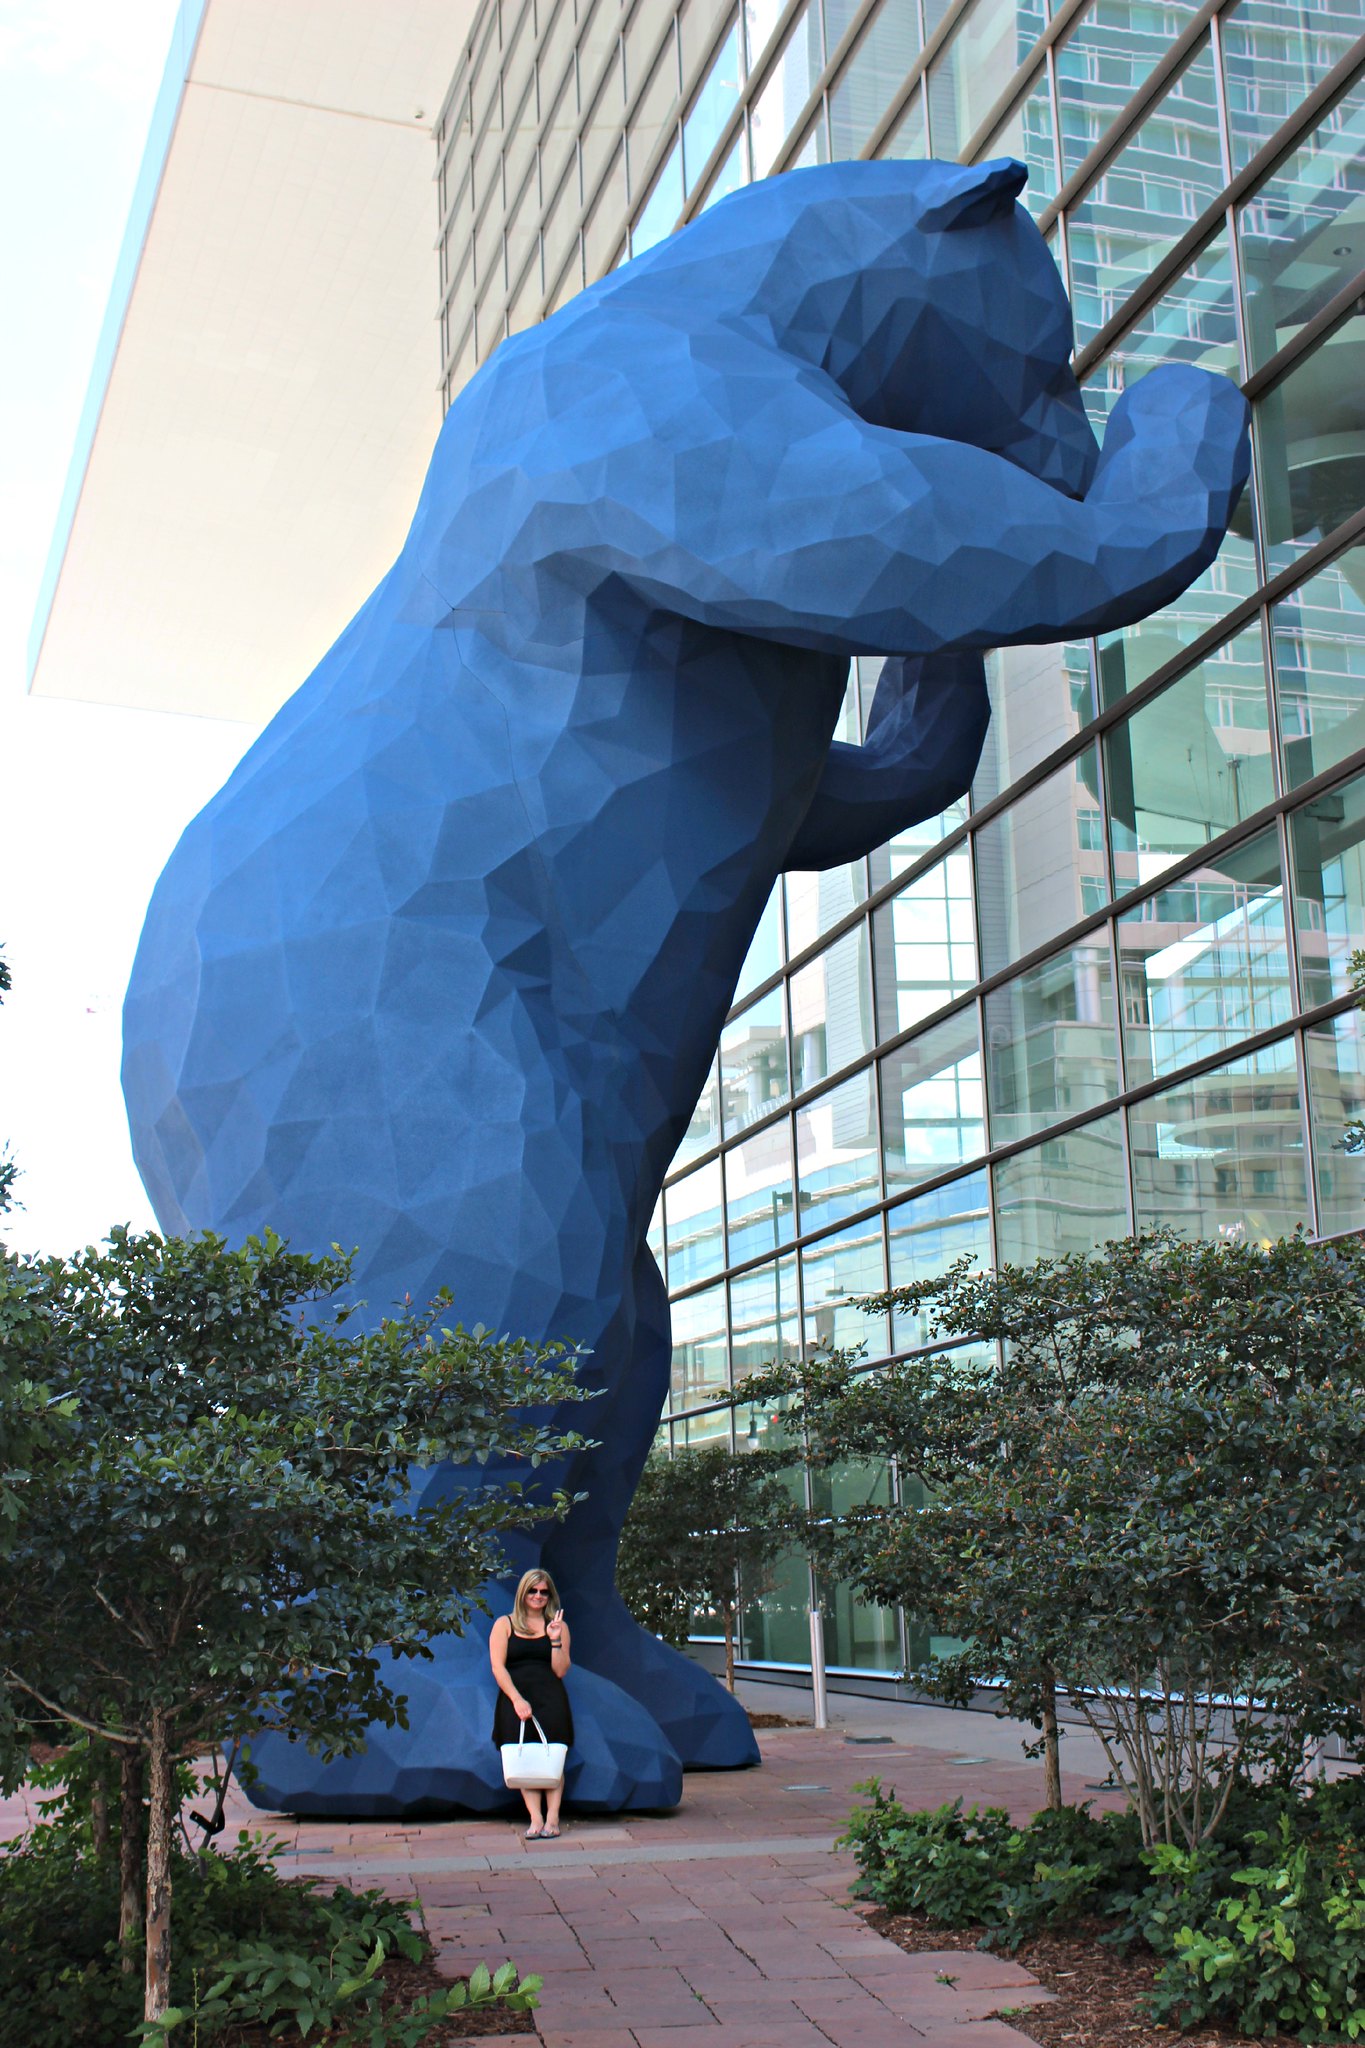 Big Blue Bear